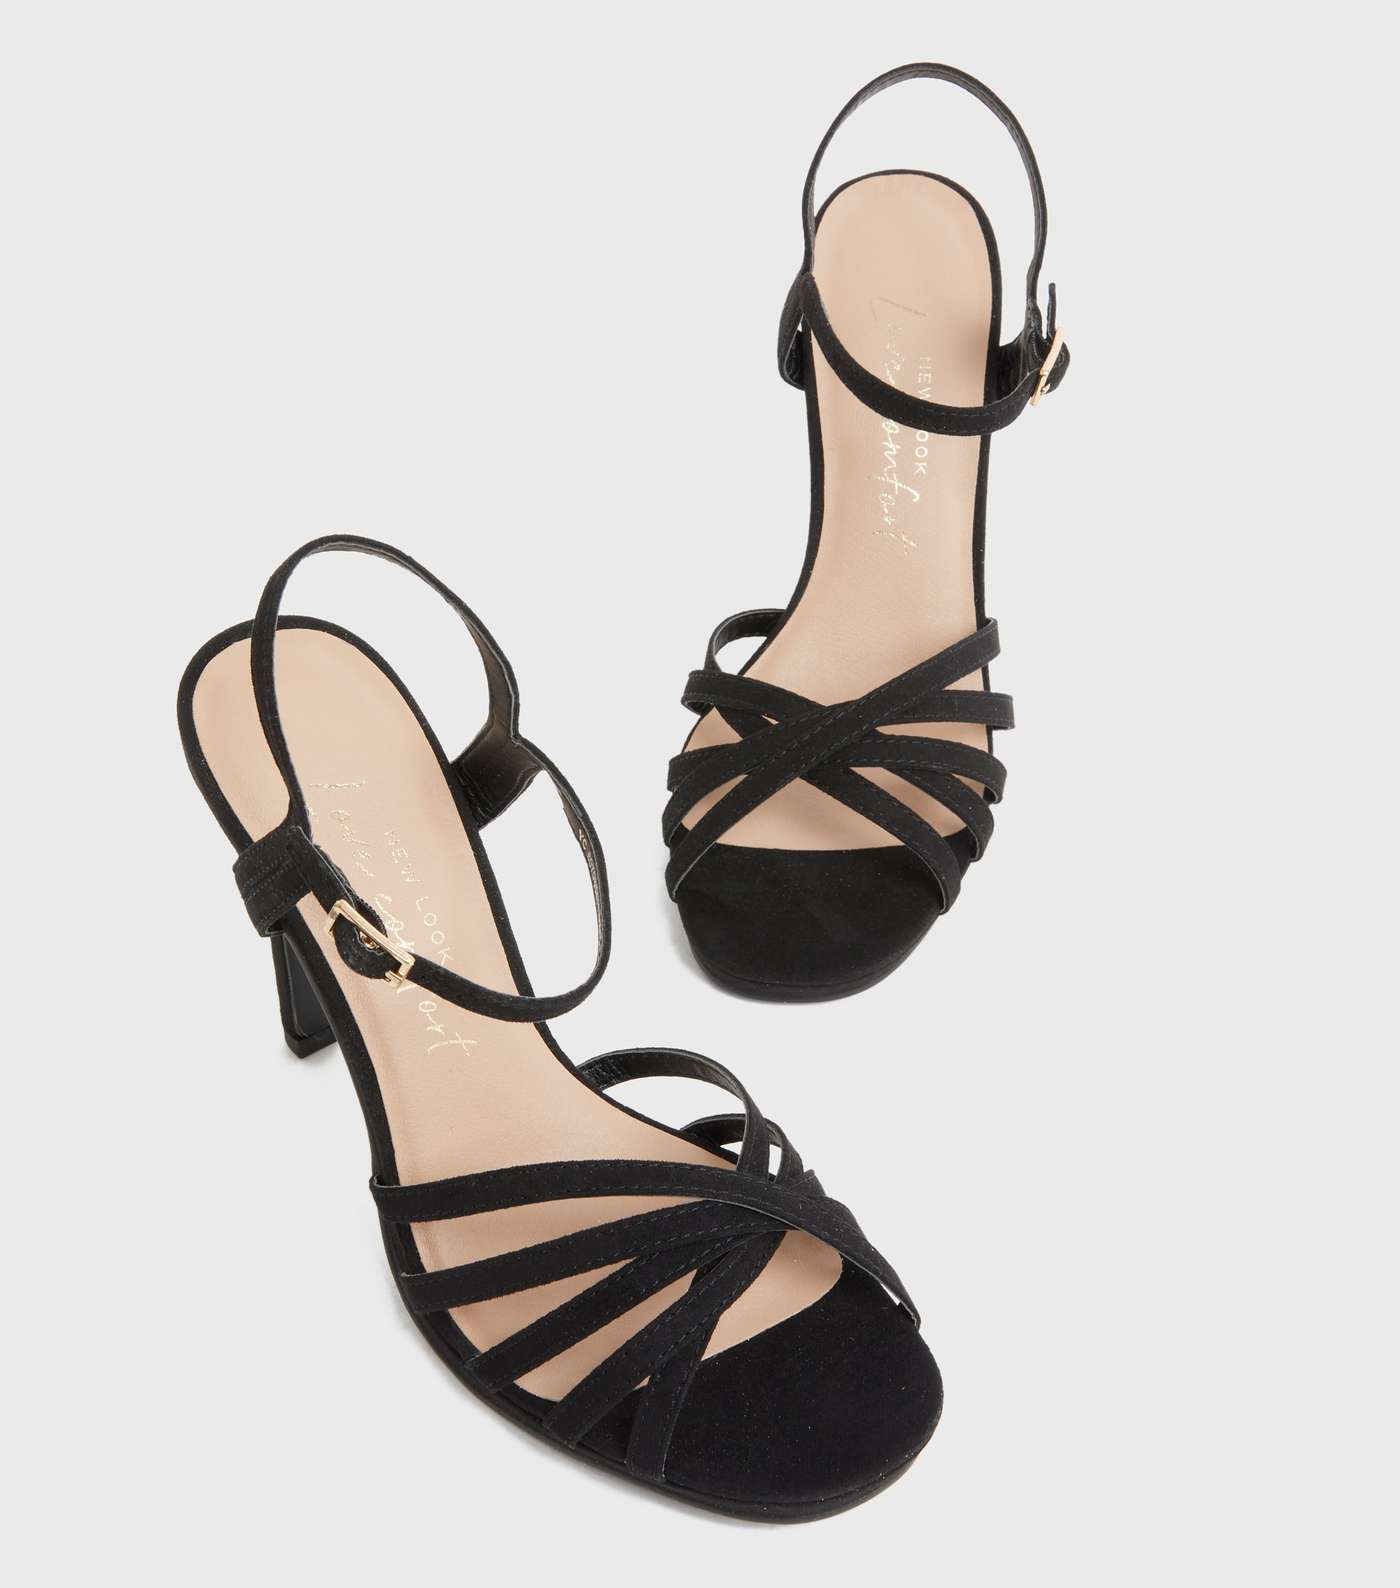 Black Suedette Caged Platform Stiletto Heel Sandals Image 4